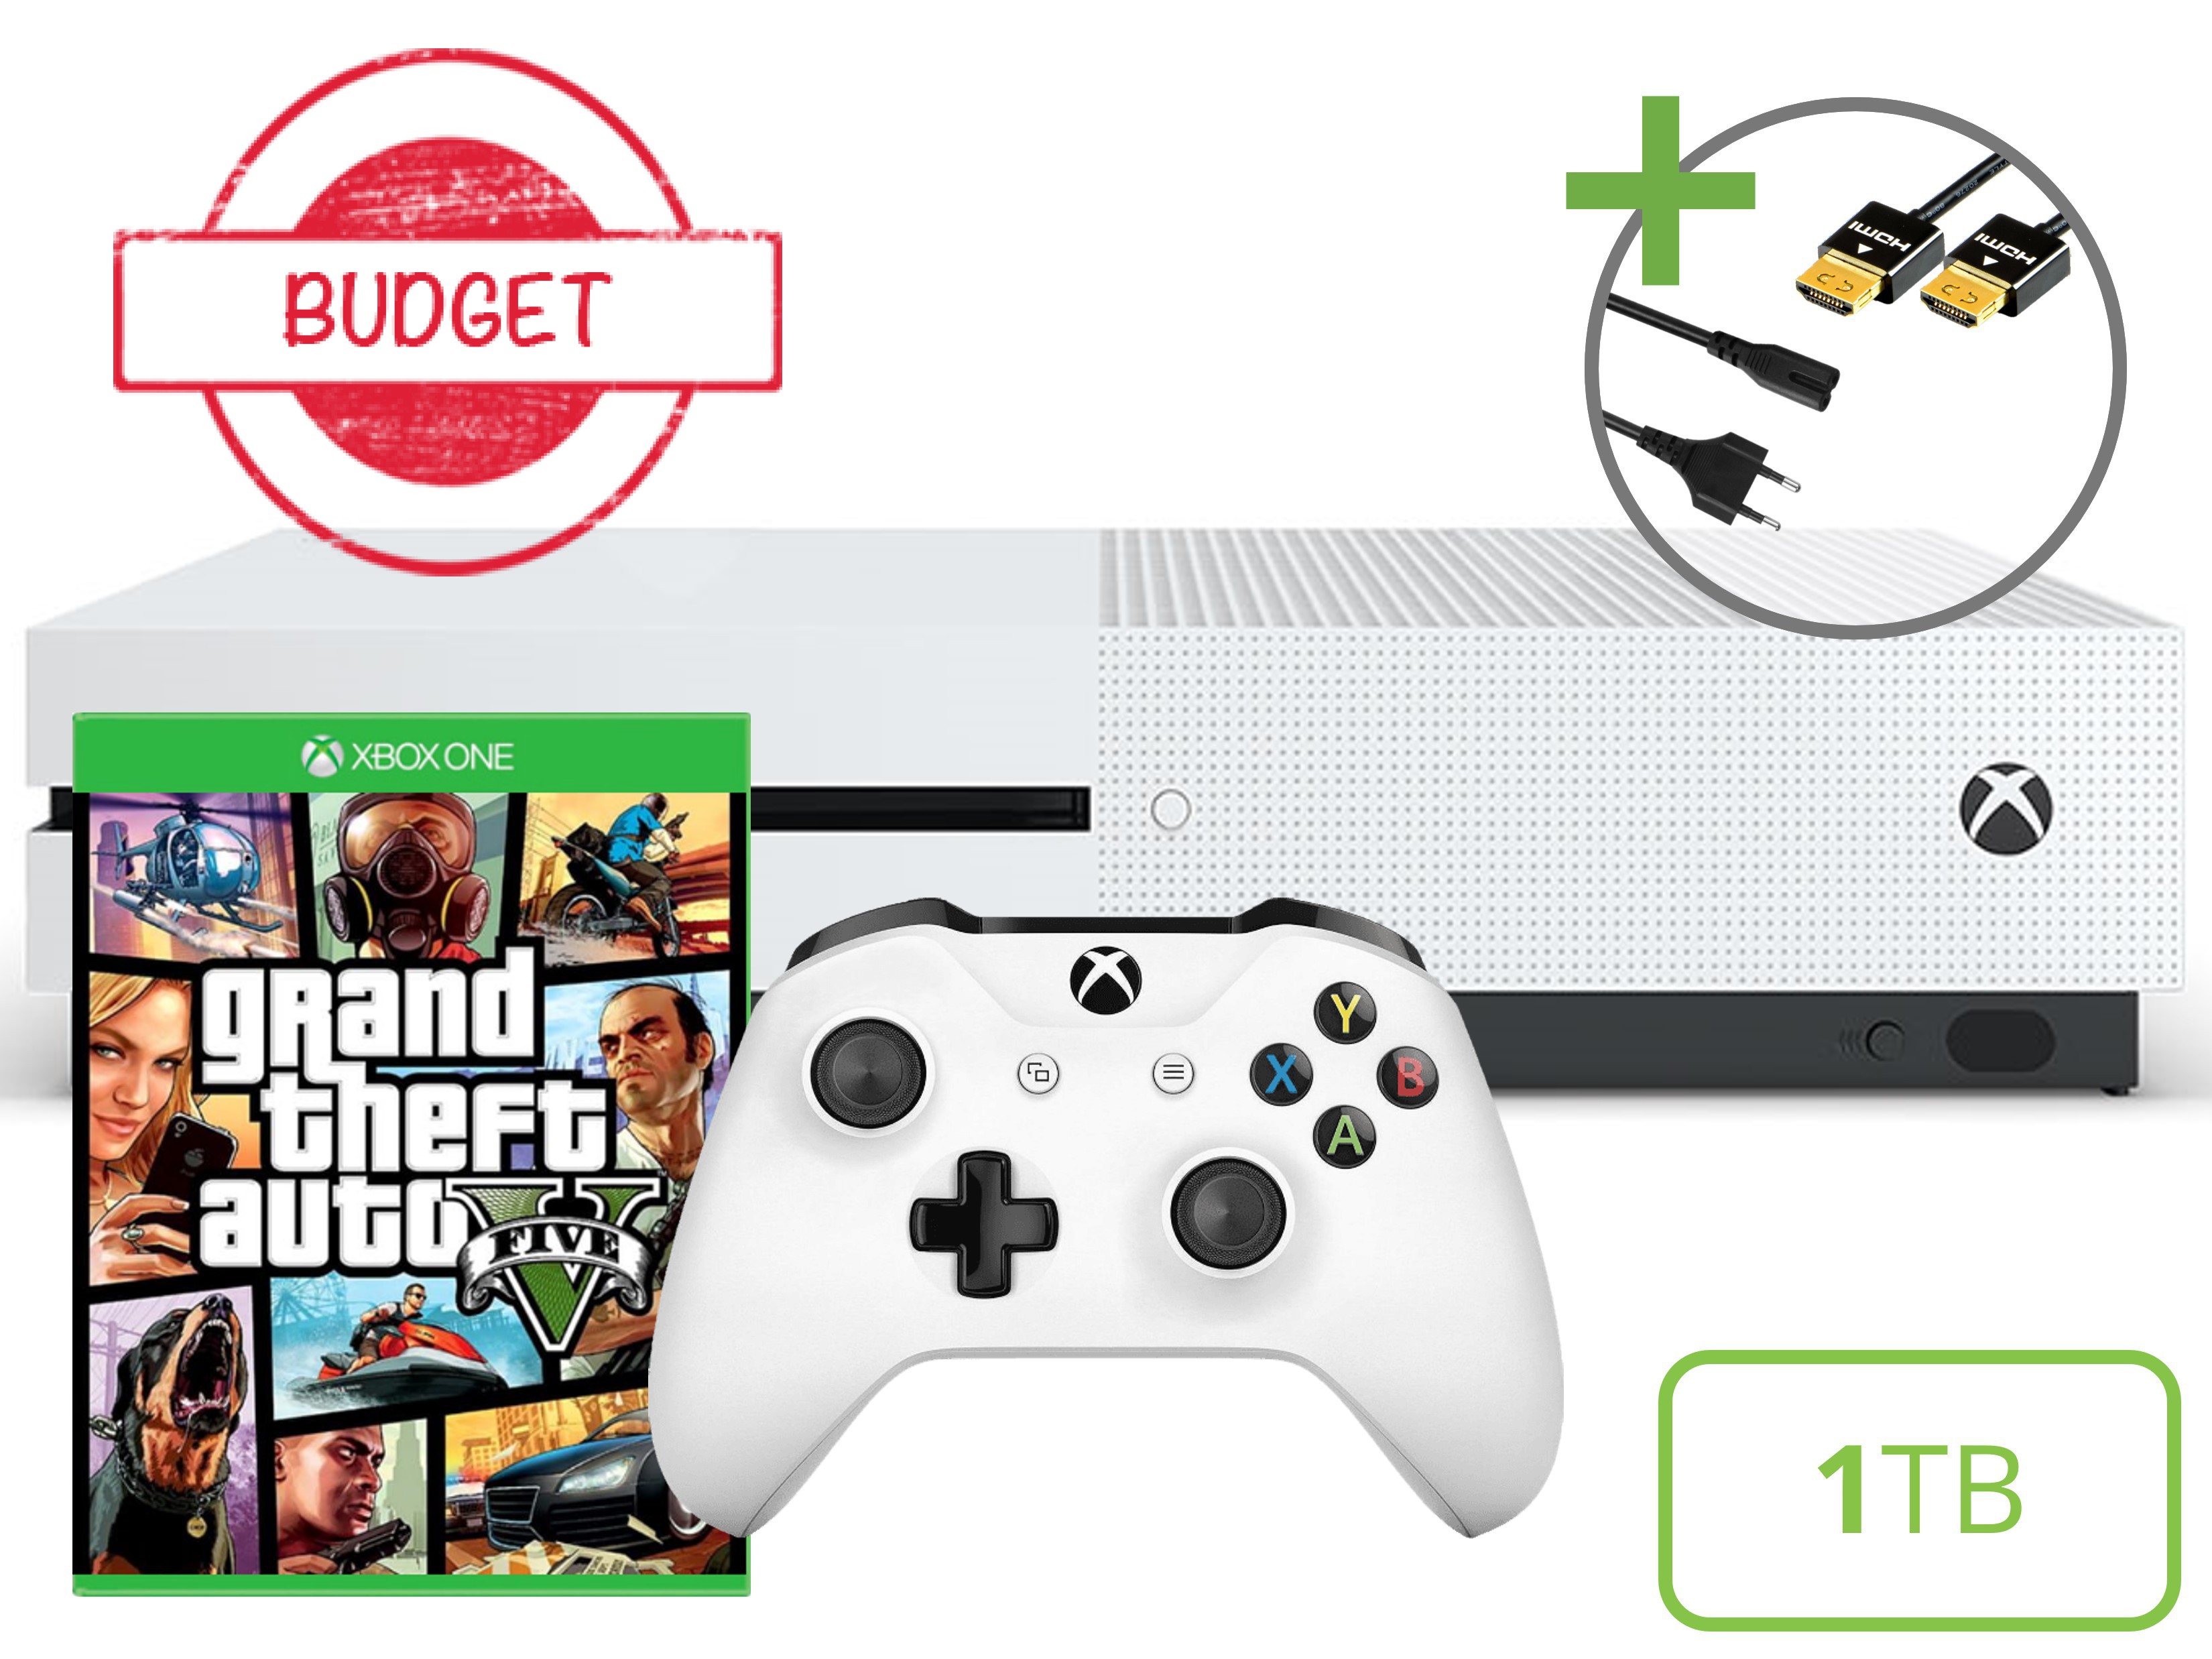 Microsoft Xbox One S Starter Pack - 1TB GTA V Edition - Budget Kopen | Xbox One Hardware